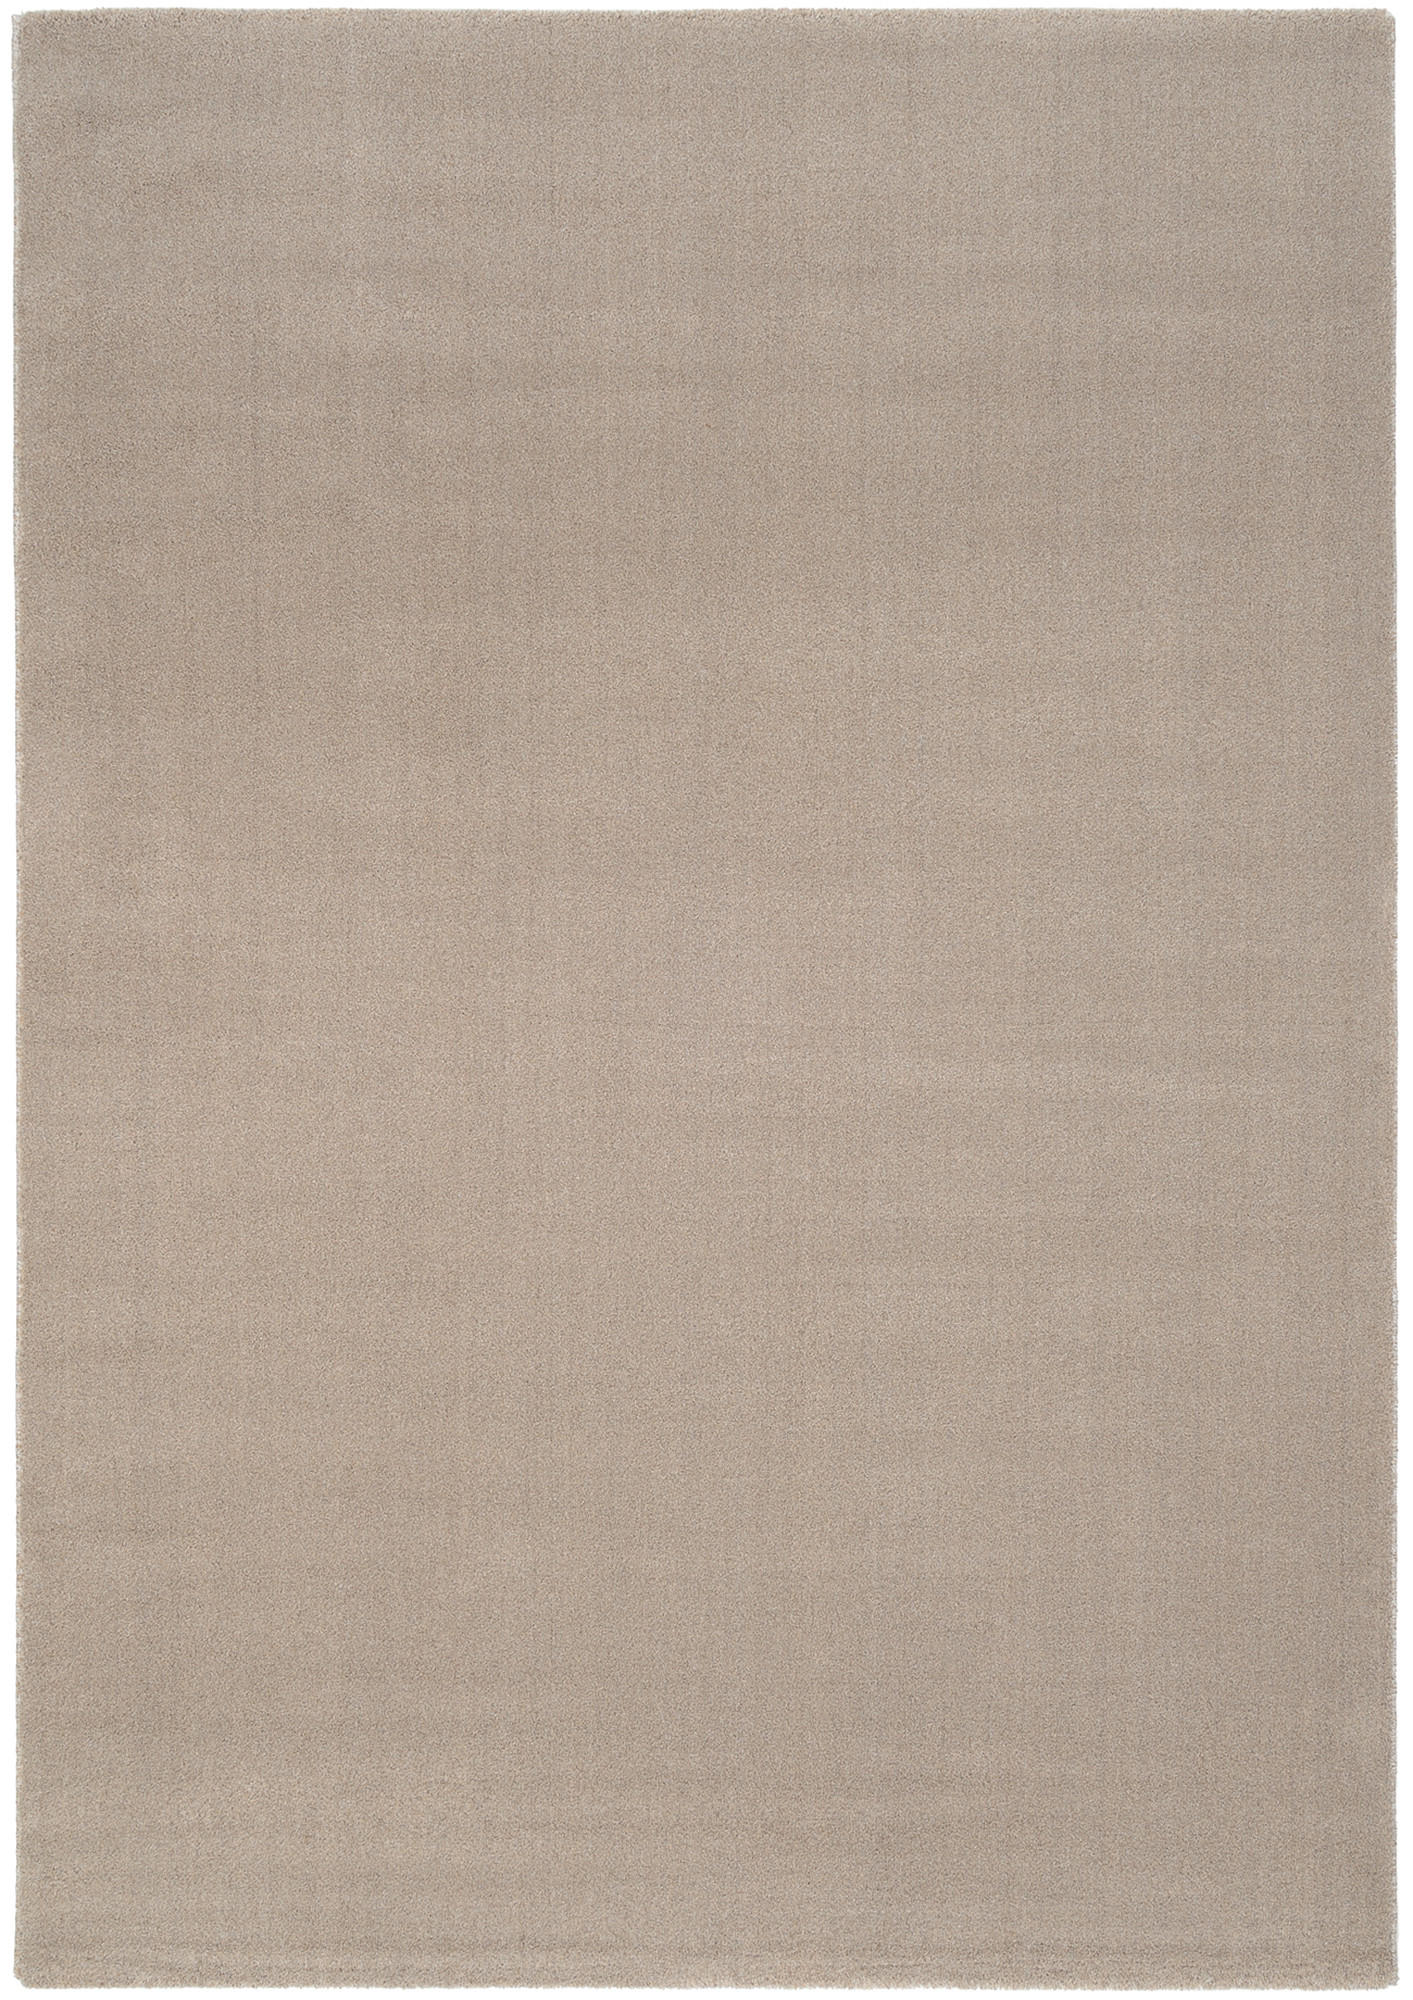 TEPPICH 80/150 cm  - Gelb, Basics, Textil (80/150cm) - Novel